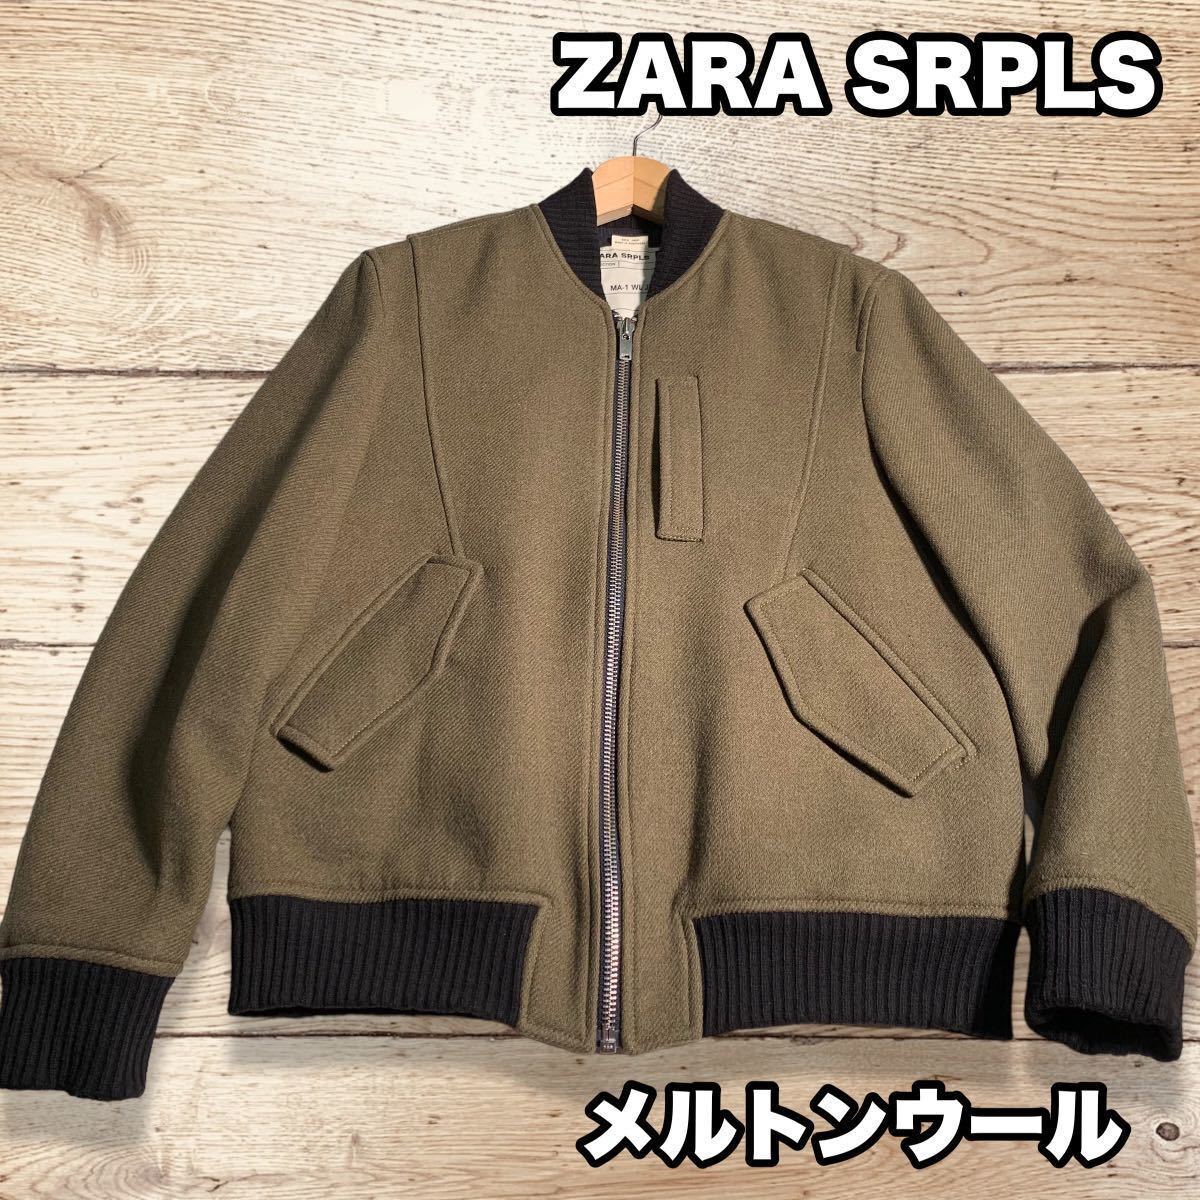 ZARA SRPLS メンズ MA-1 フライトジャケット ウール ブルゾン Lサイズ スタジャン メルトンウール ブルゾン_画像1